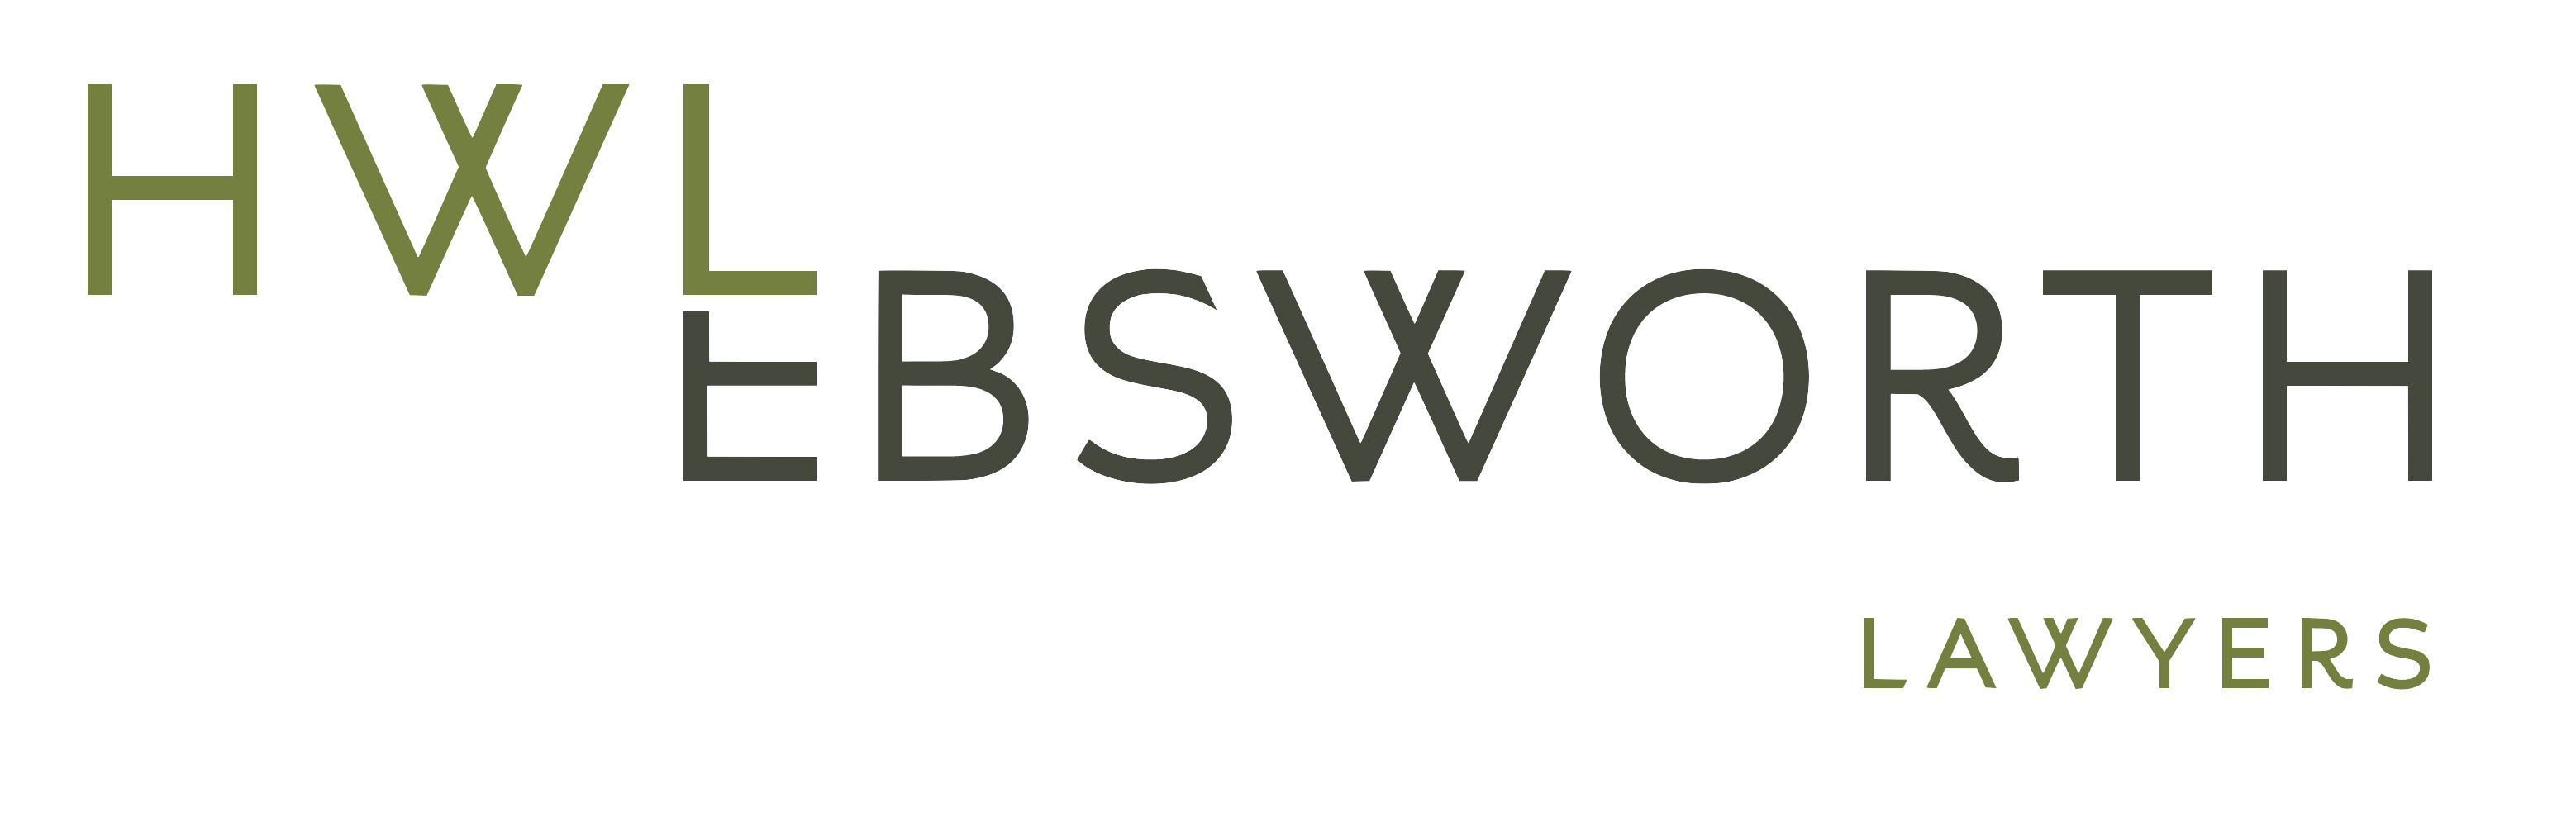 HWL logo